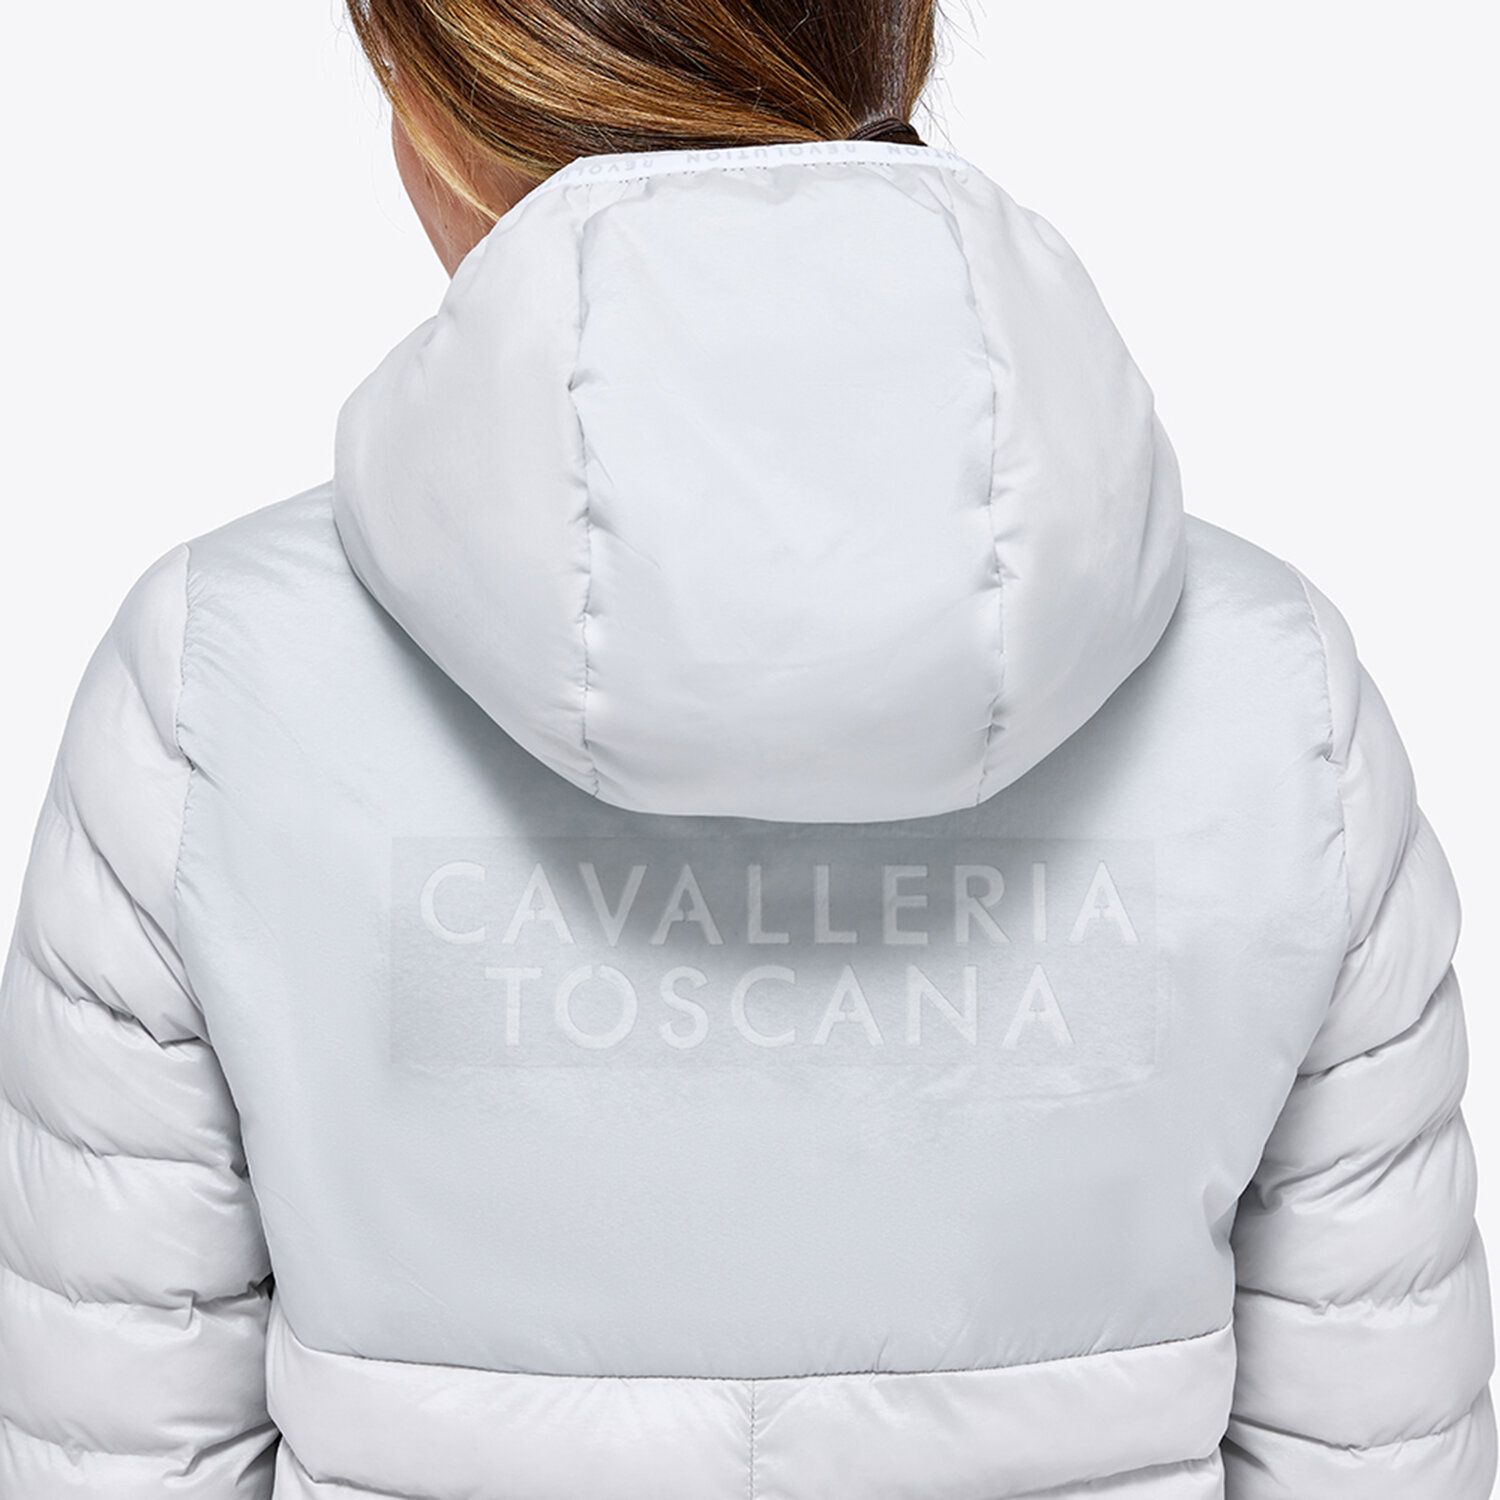 Cavalleria Toscana Puffer jacket with detachable hood PEARL GREY-7